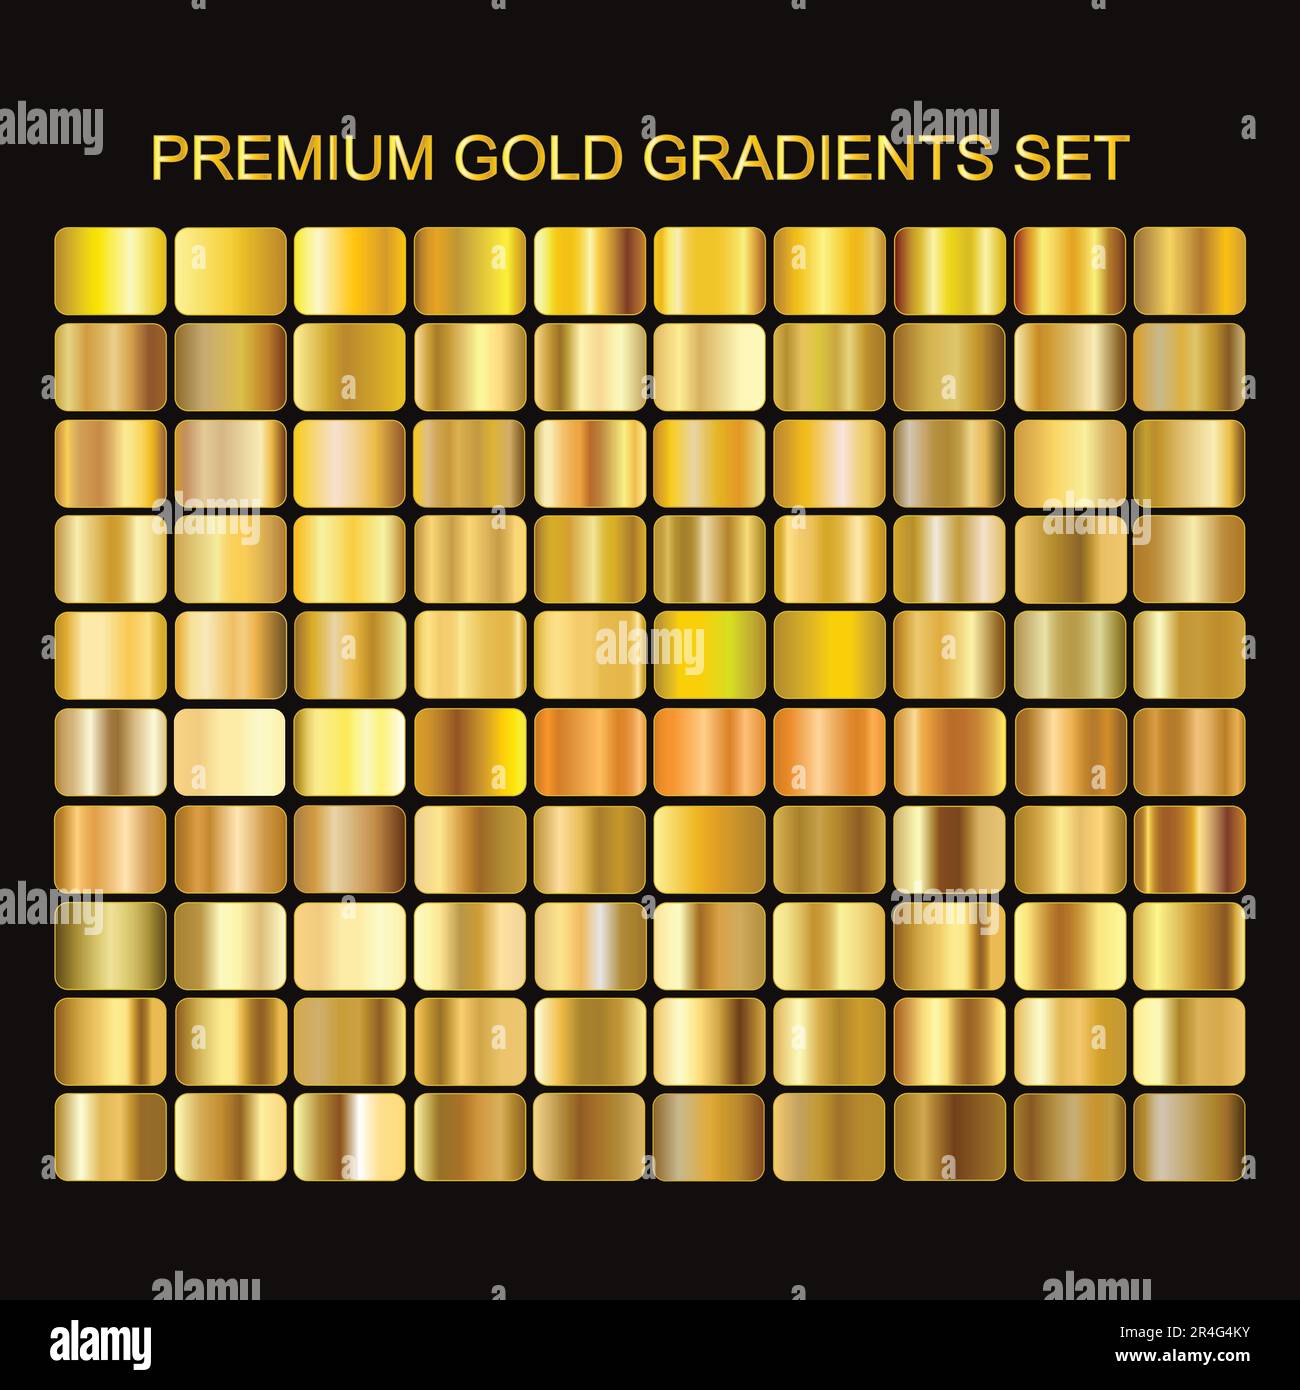 Premium Gold Gradients Set, 100 Gold Gradient Swatches Vector Pack. Stock Vector